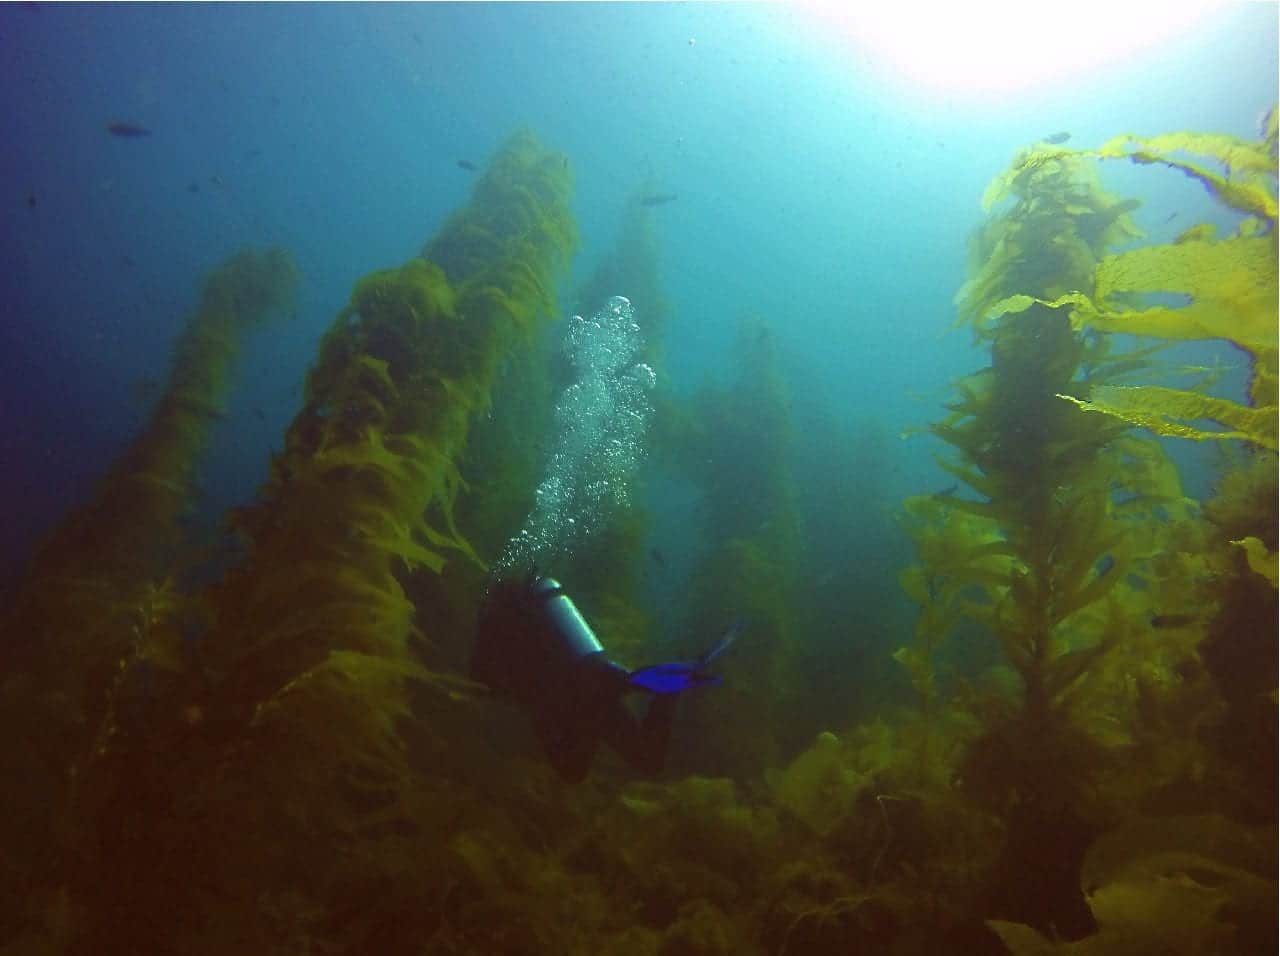 Following Jenn into the kelp